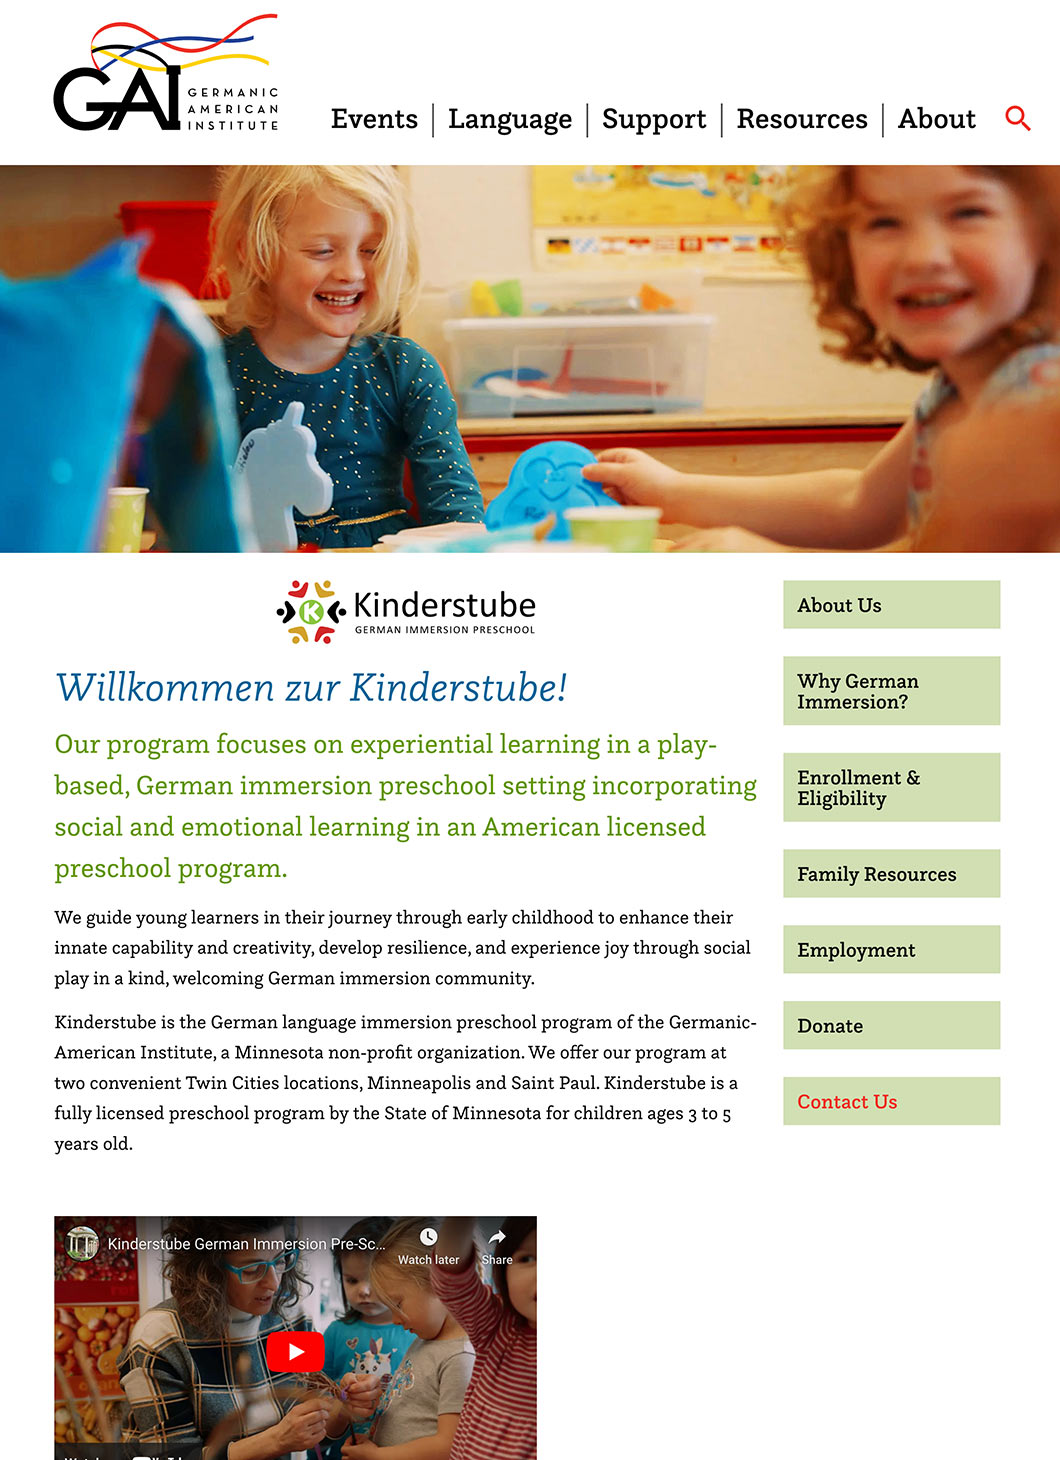 Germanic-American Institute - Kinderstube